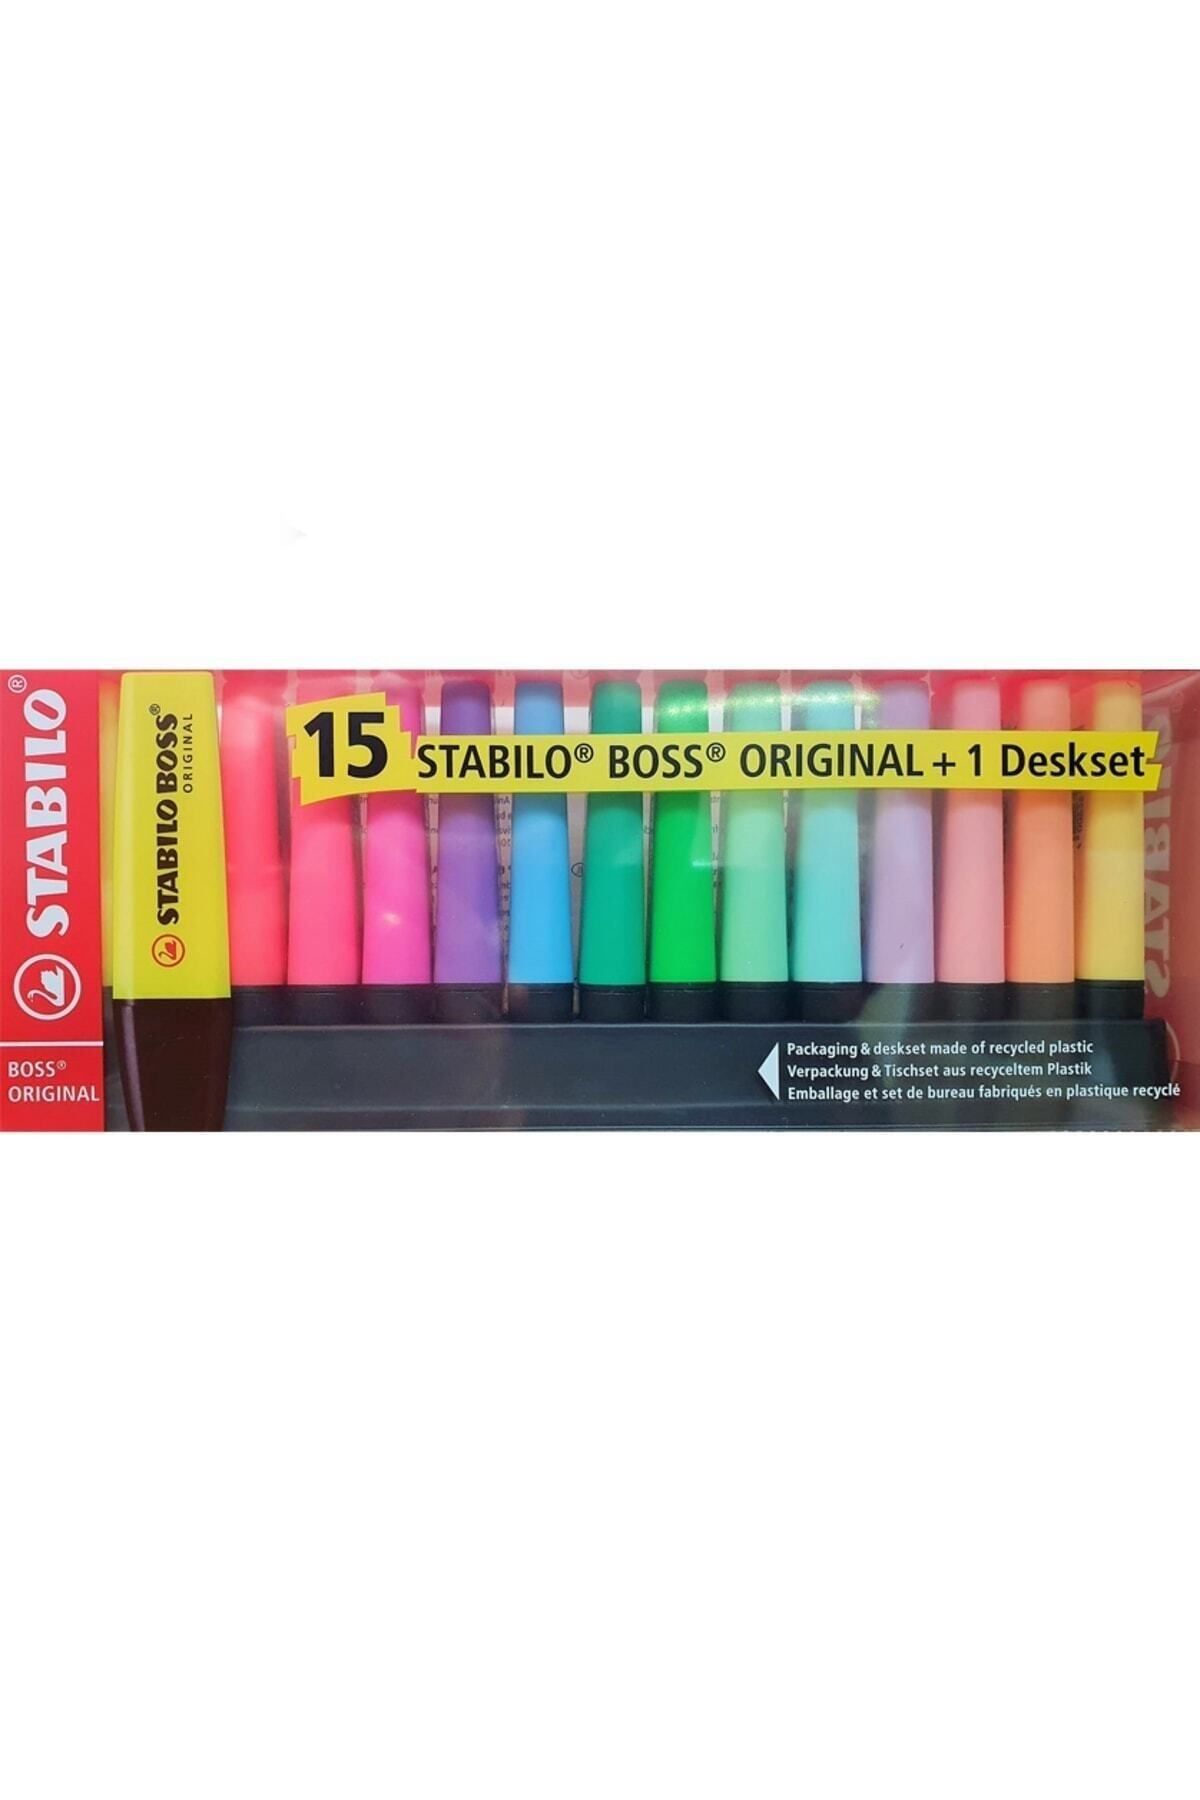 Highlighter - STABILO BOSS Original Pastel - Desk Set of 15pcs - 14  Assorted Colors (2X Dusty Grey)